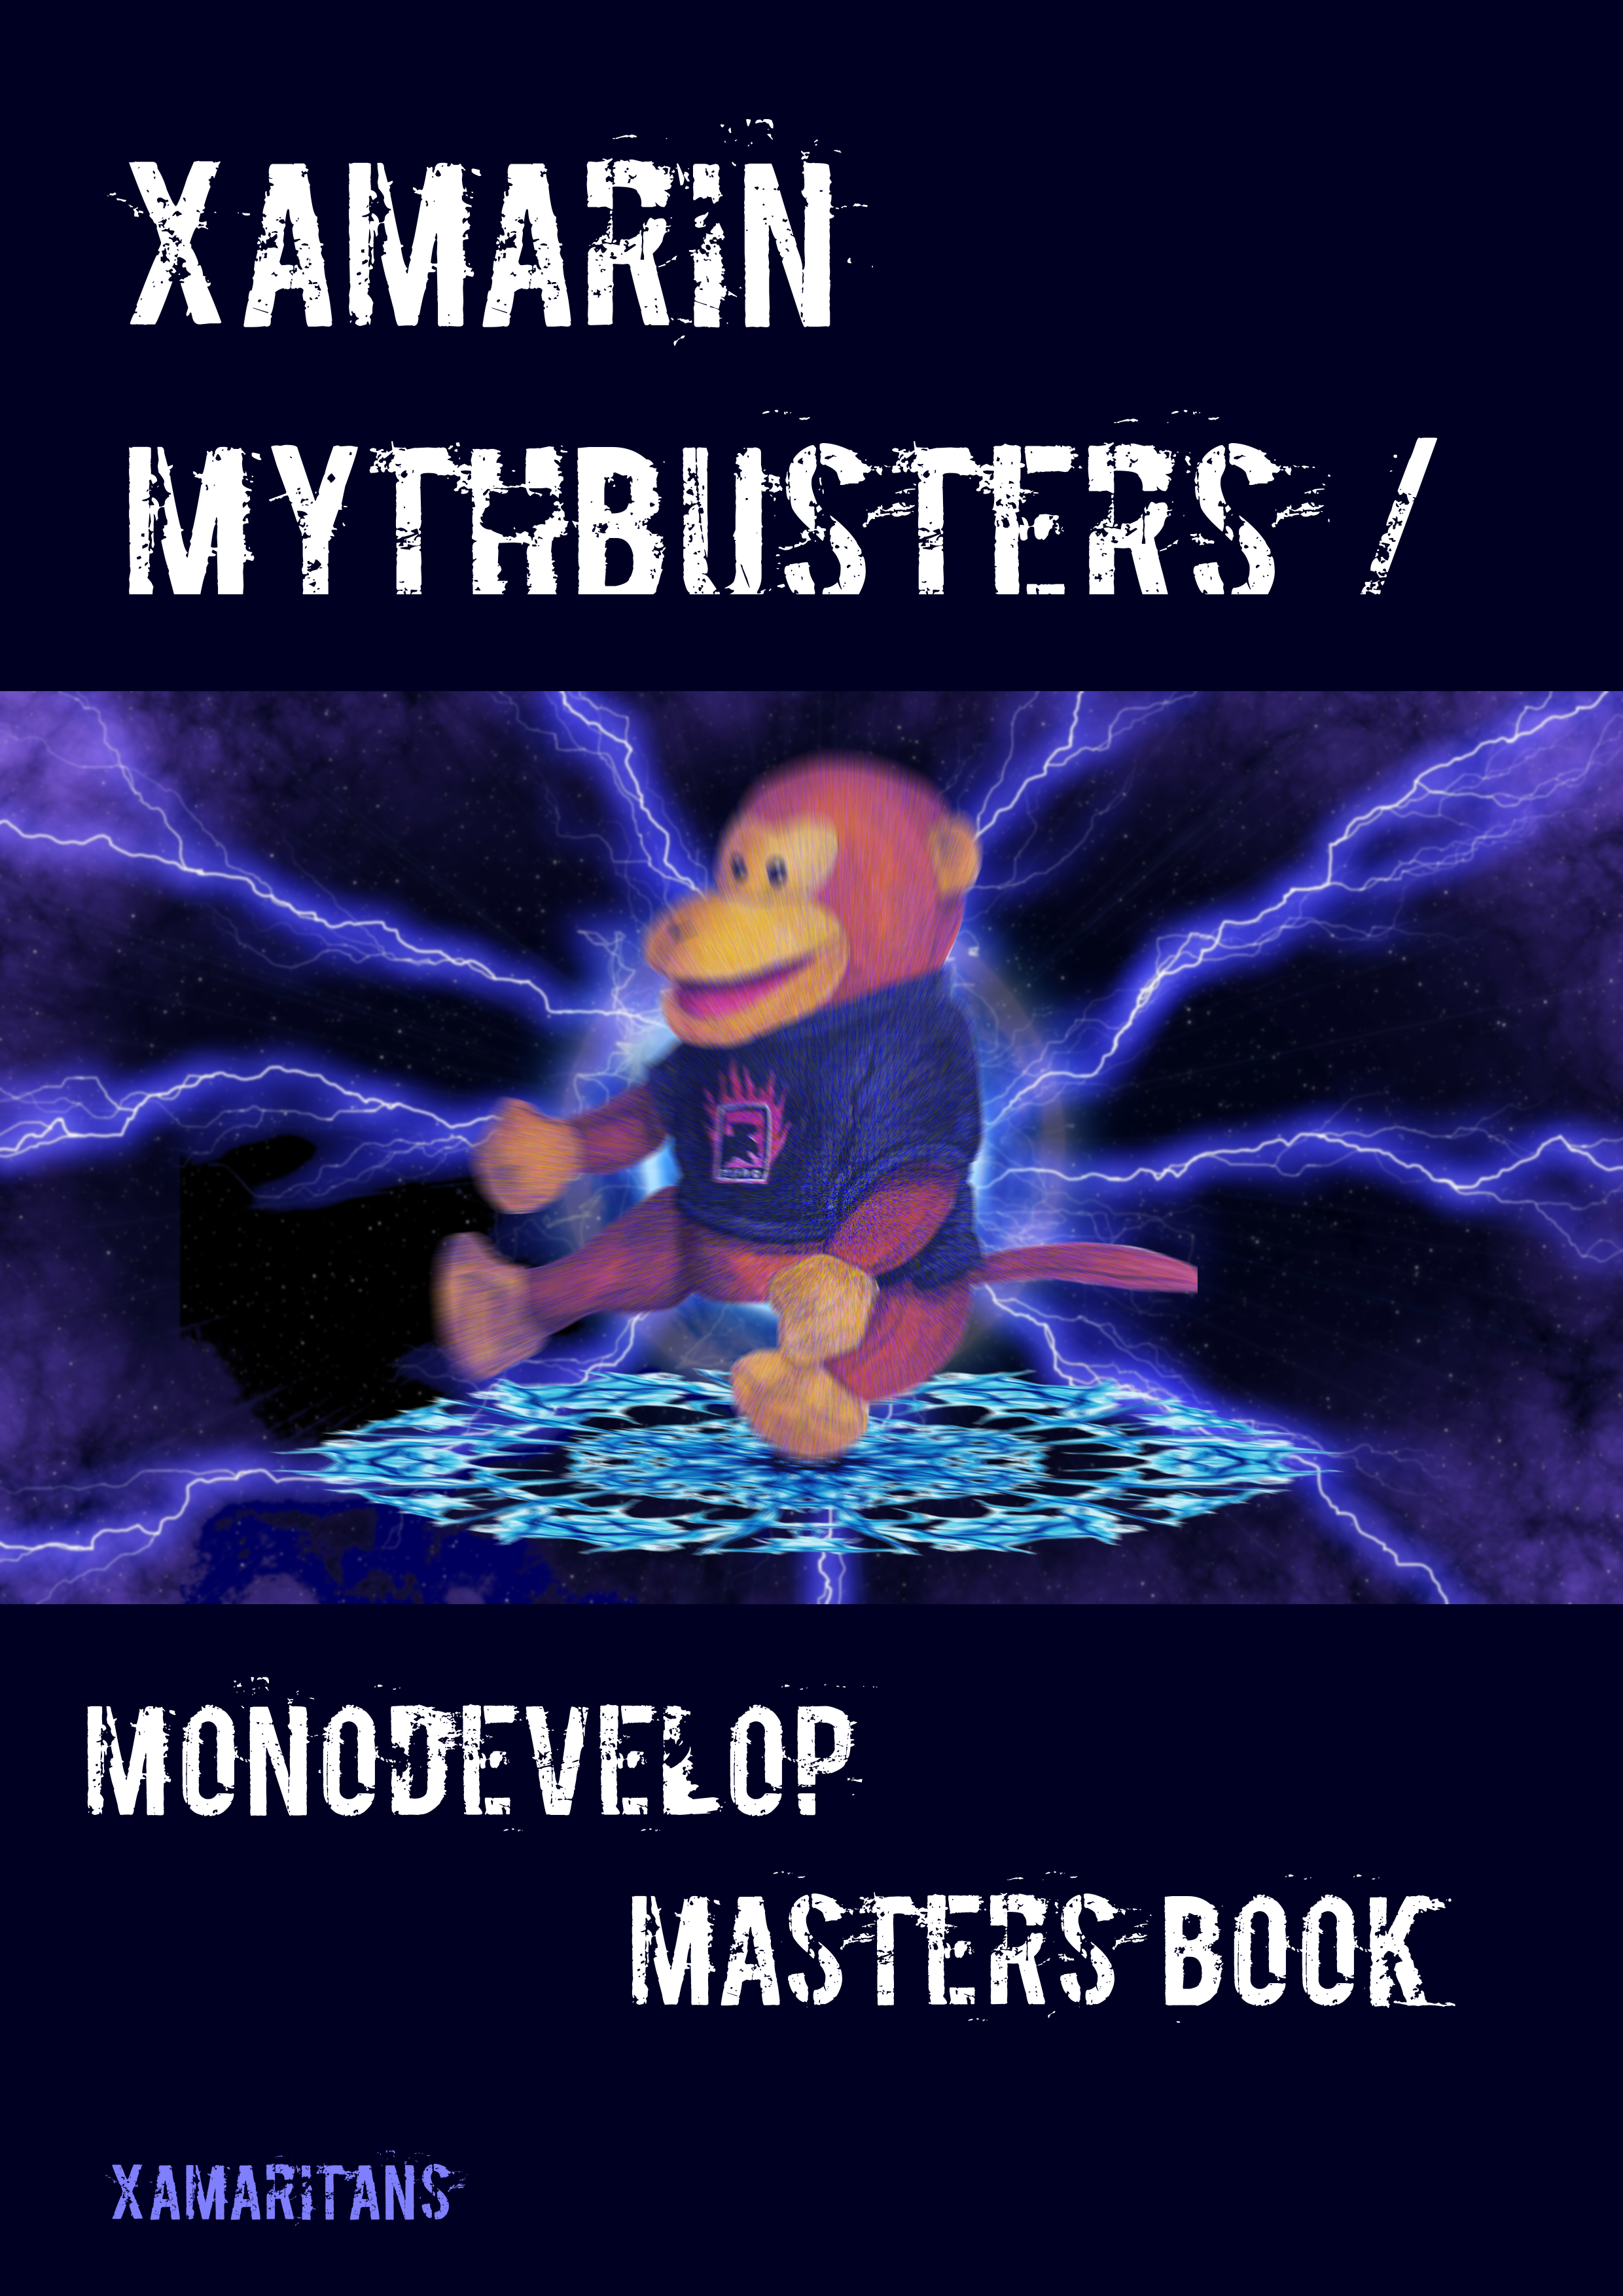 Xamarin MythBusters / MonoDevelop Masters Book